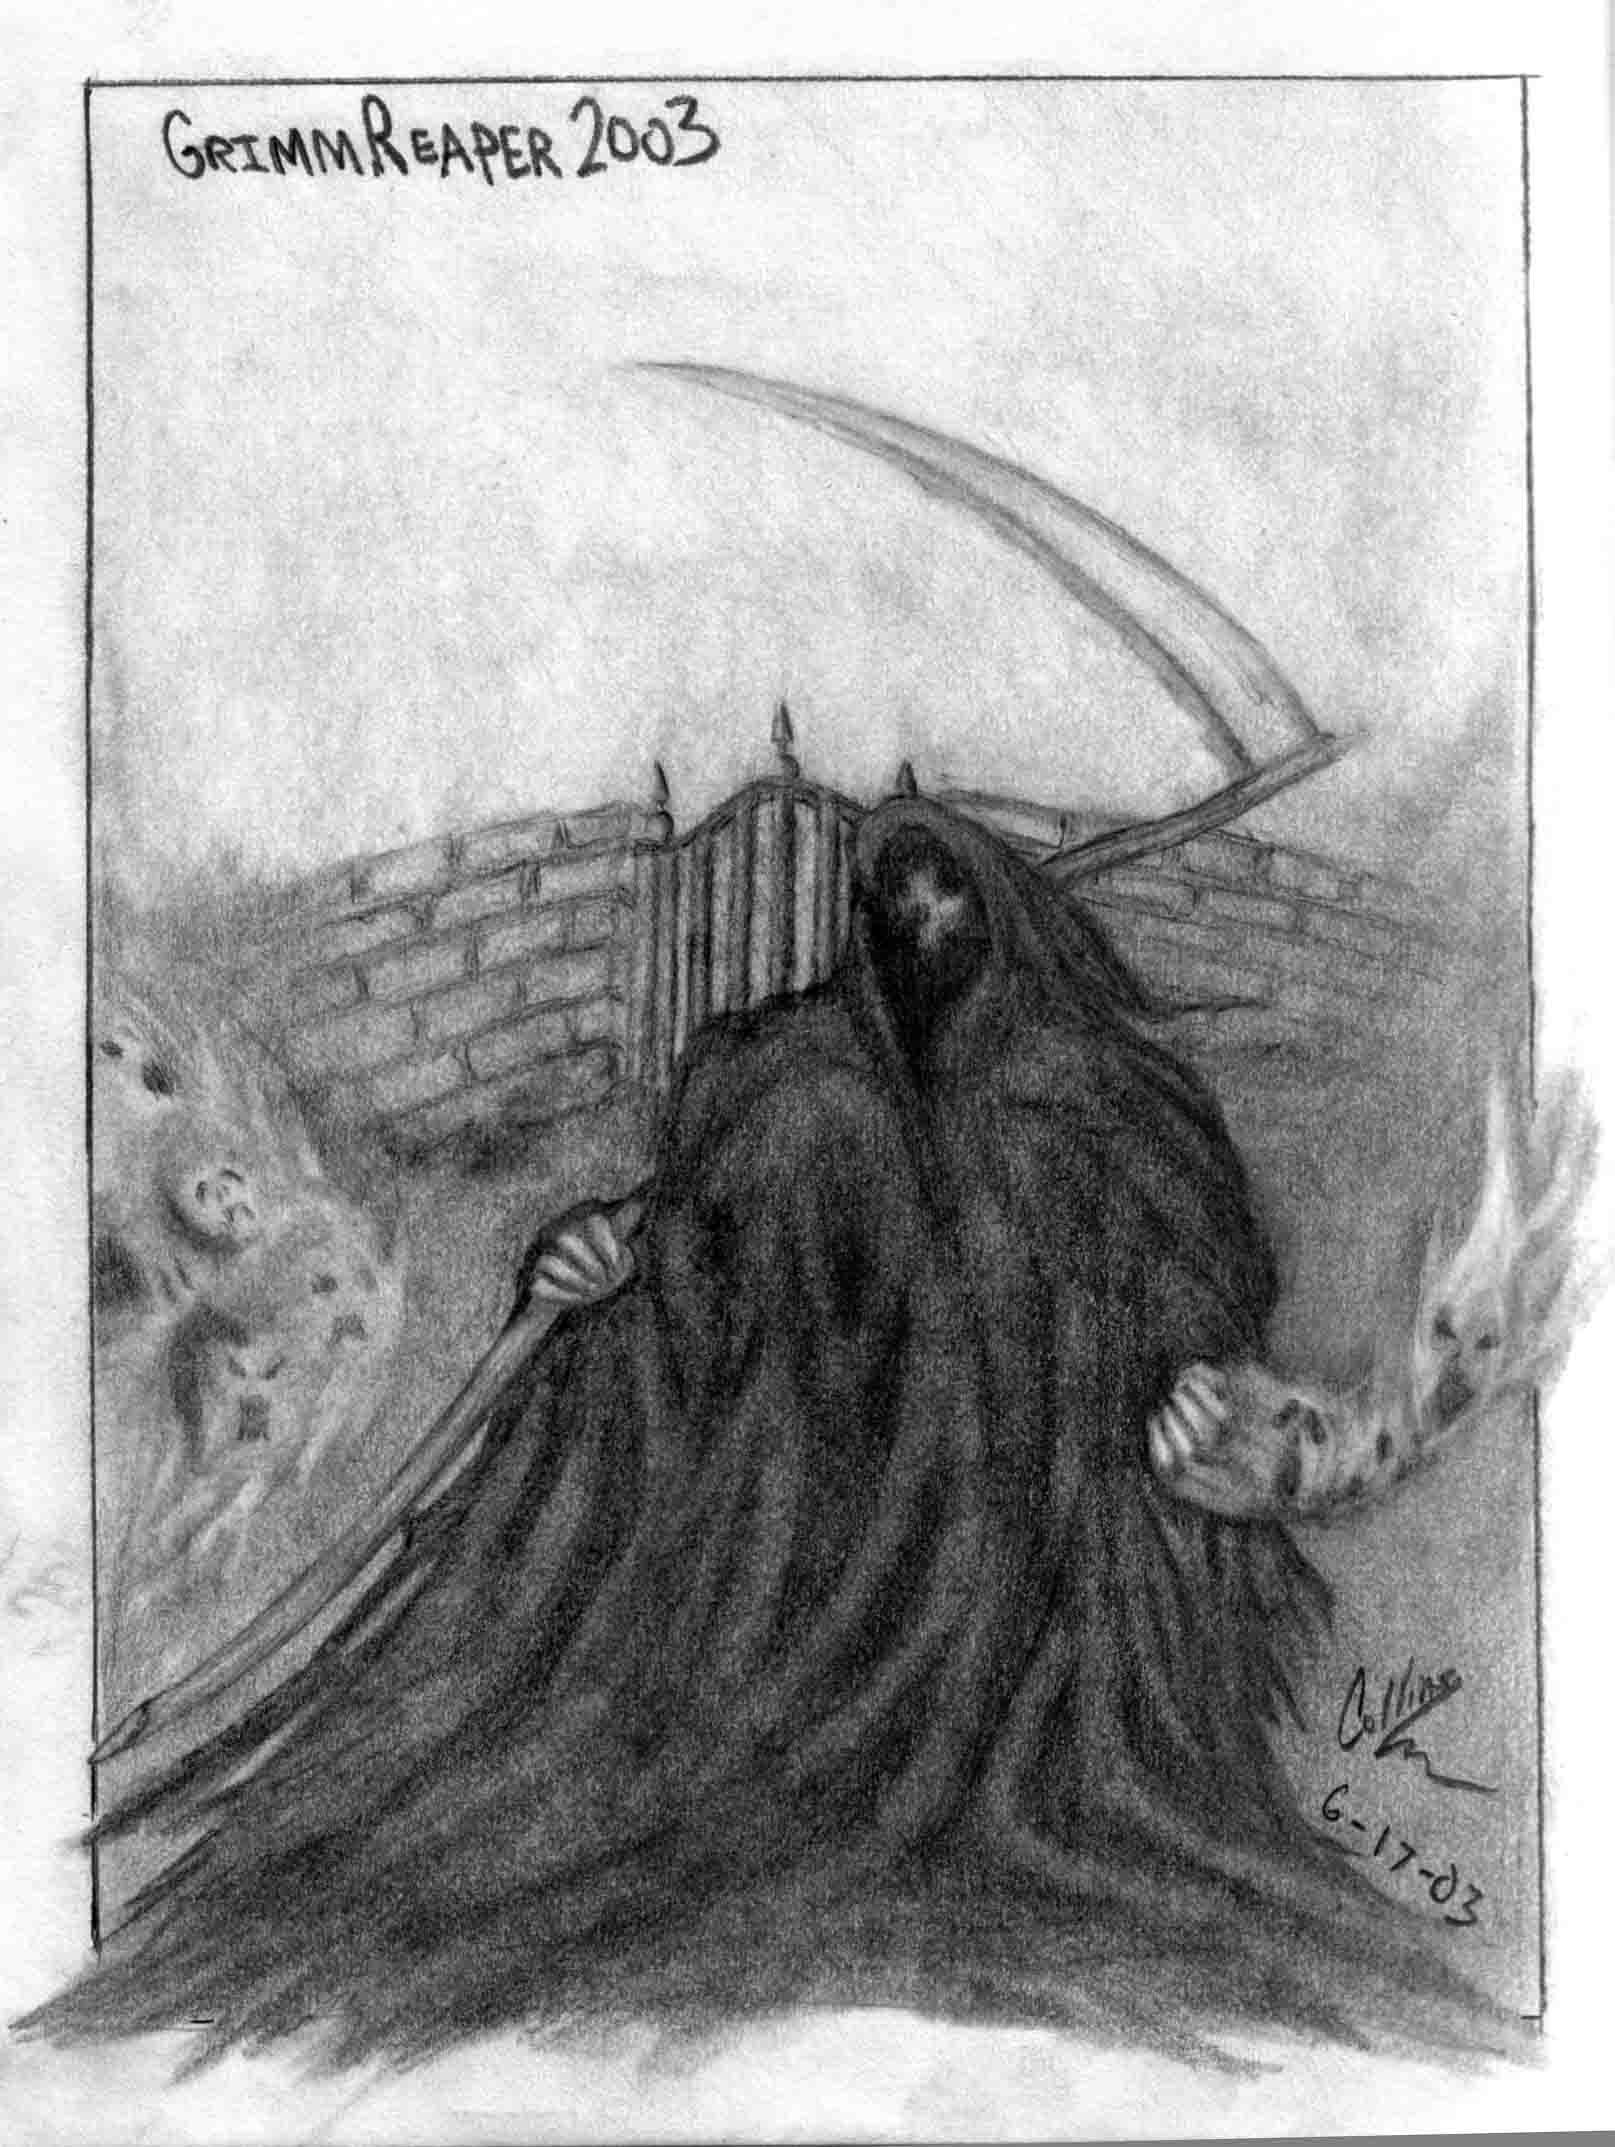 Grimm Reaper 2003 by grimmevil on DeviantArt